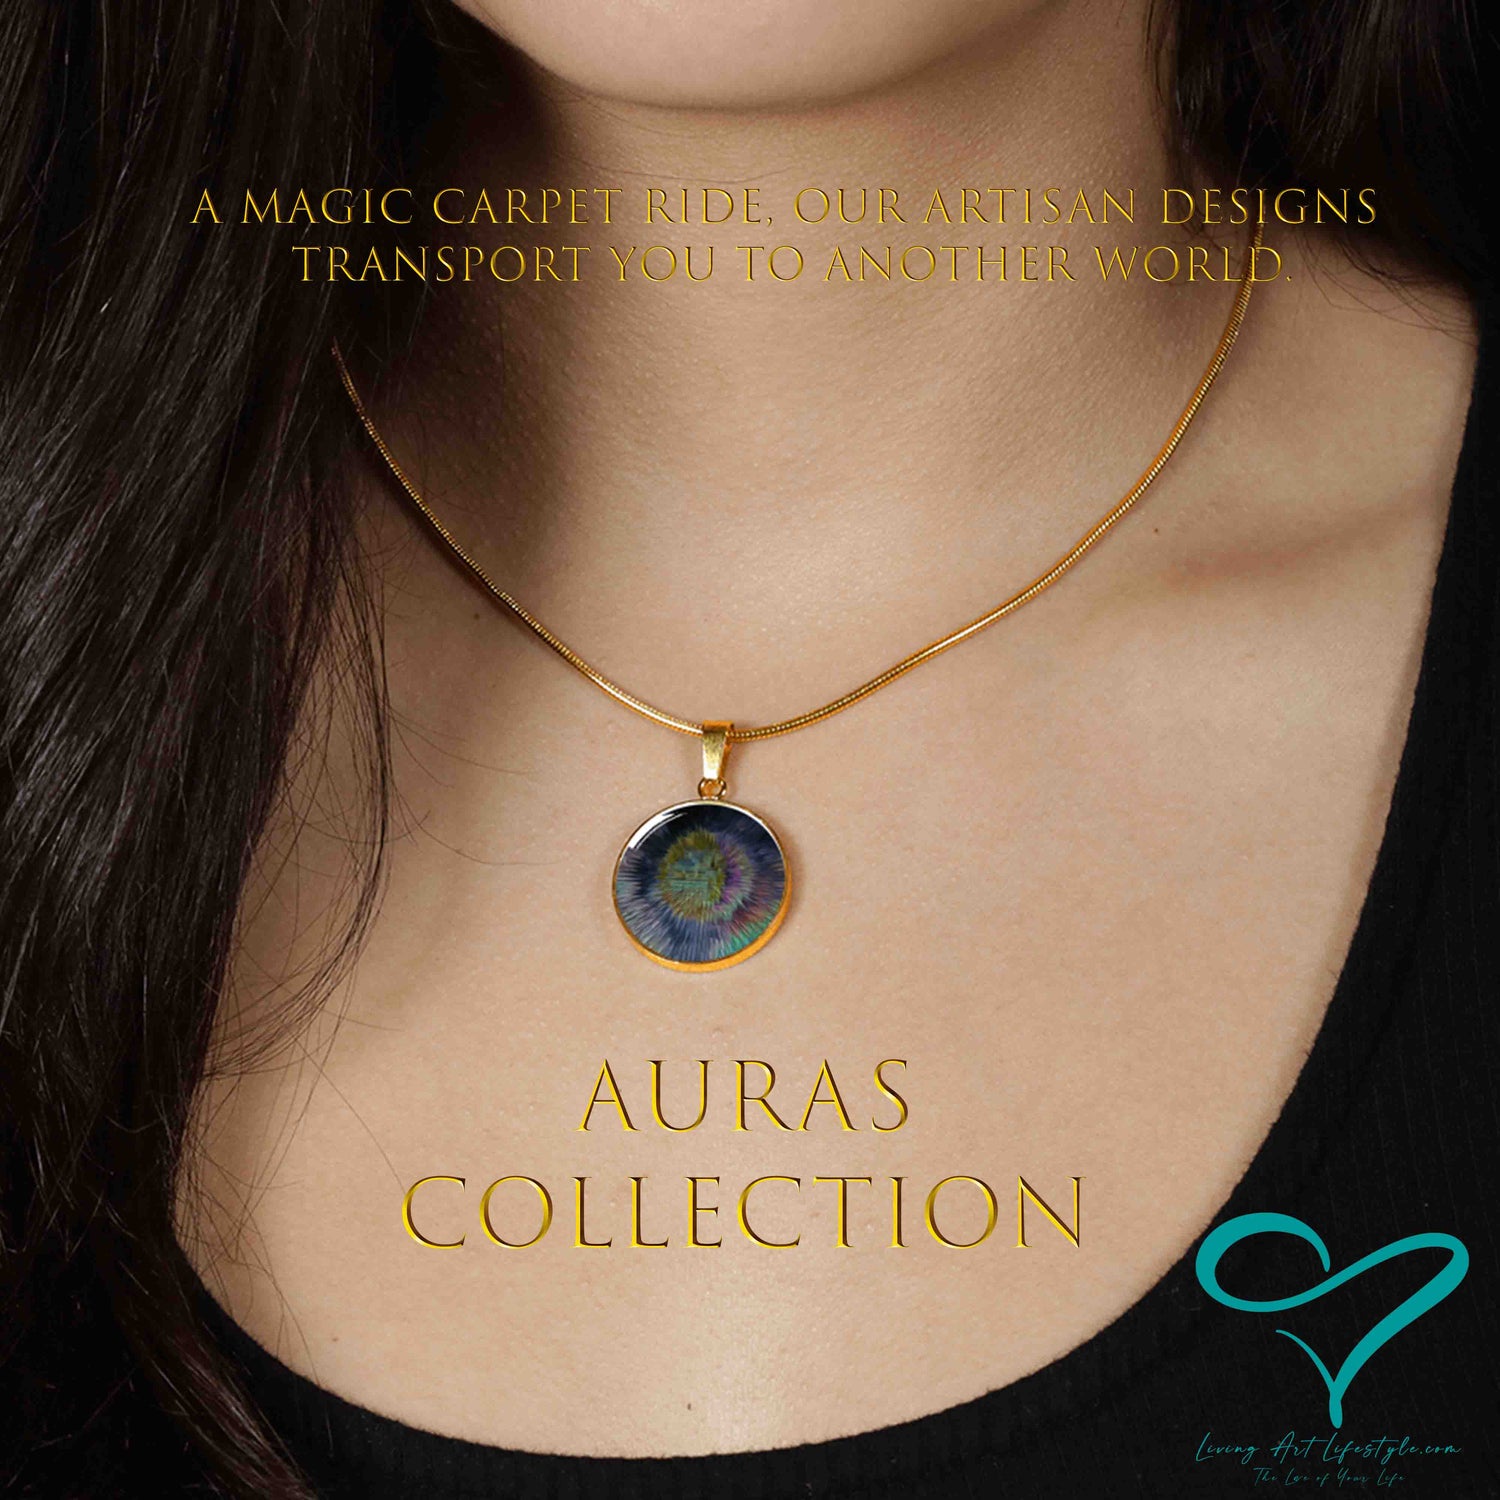 Auras Collection Designer Jewelry Circle Pendant rainbow fractal design unique